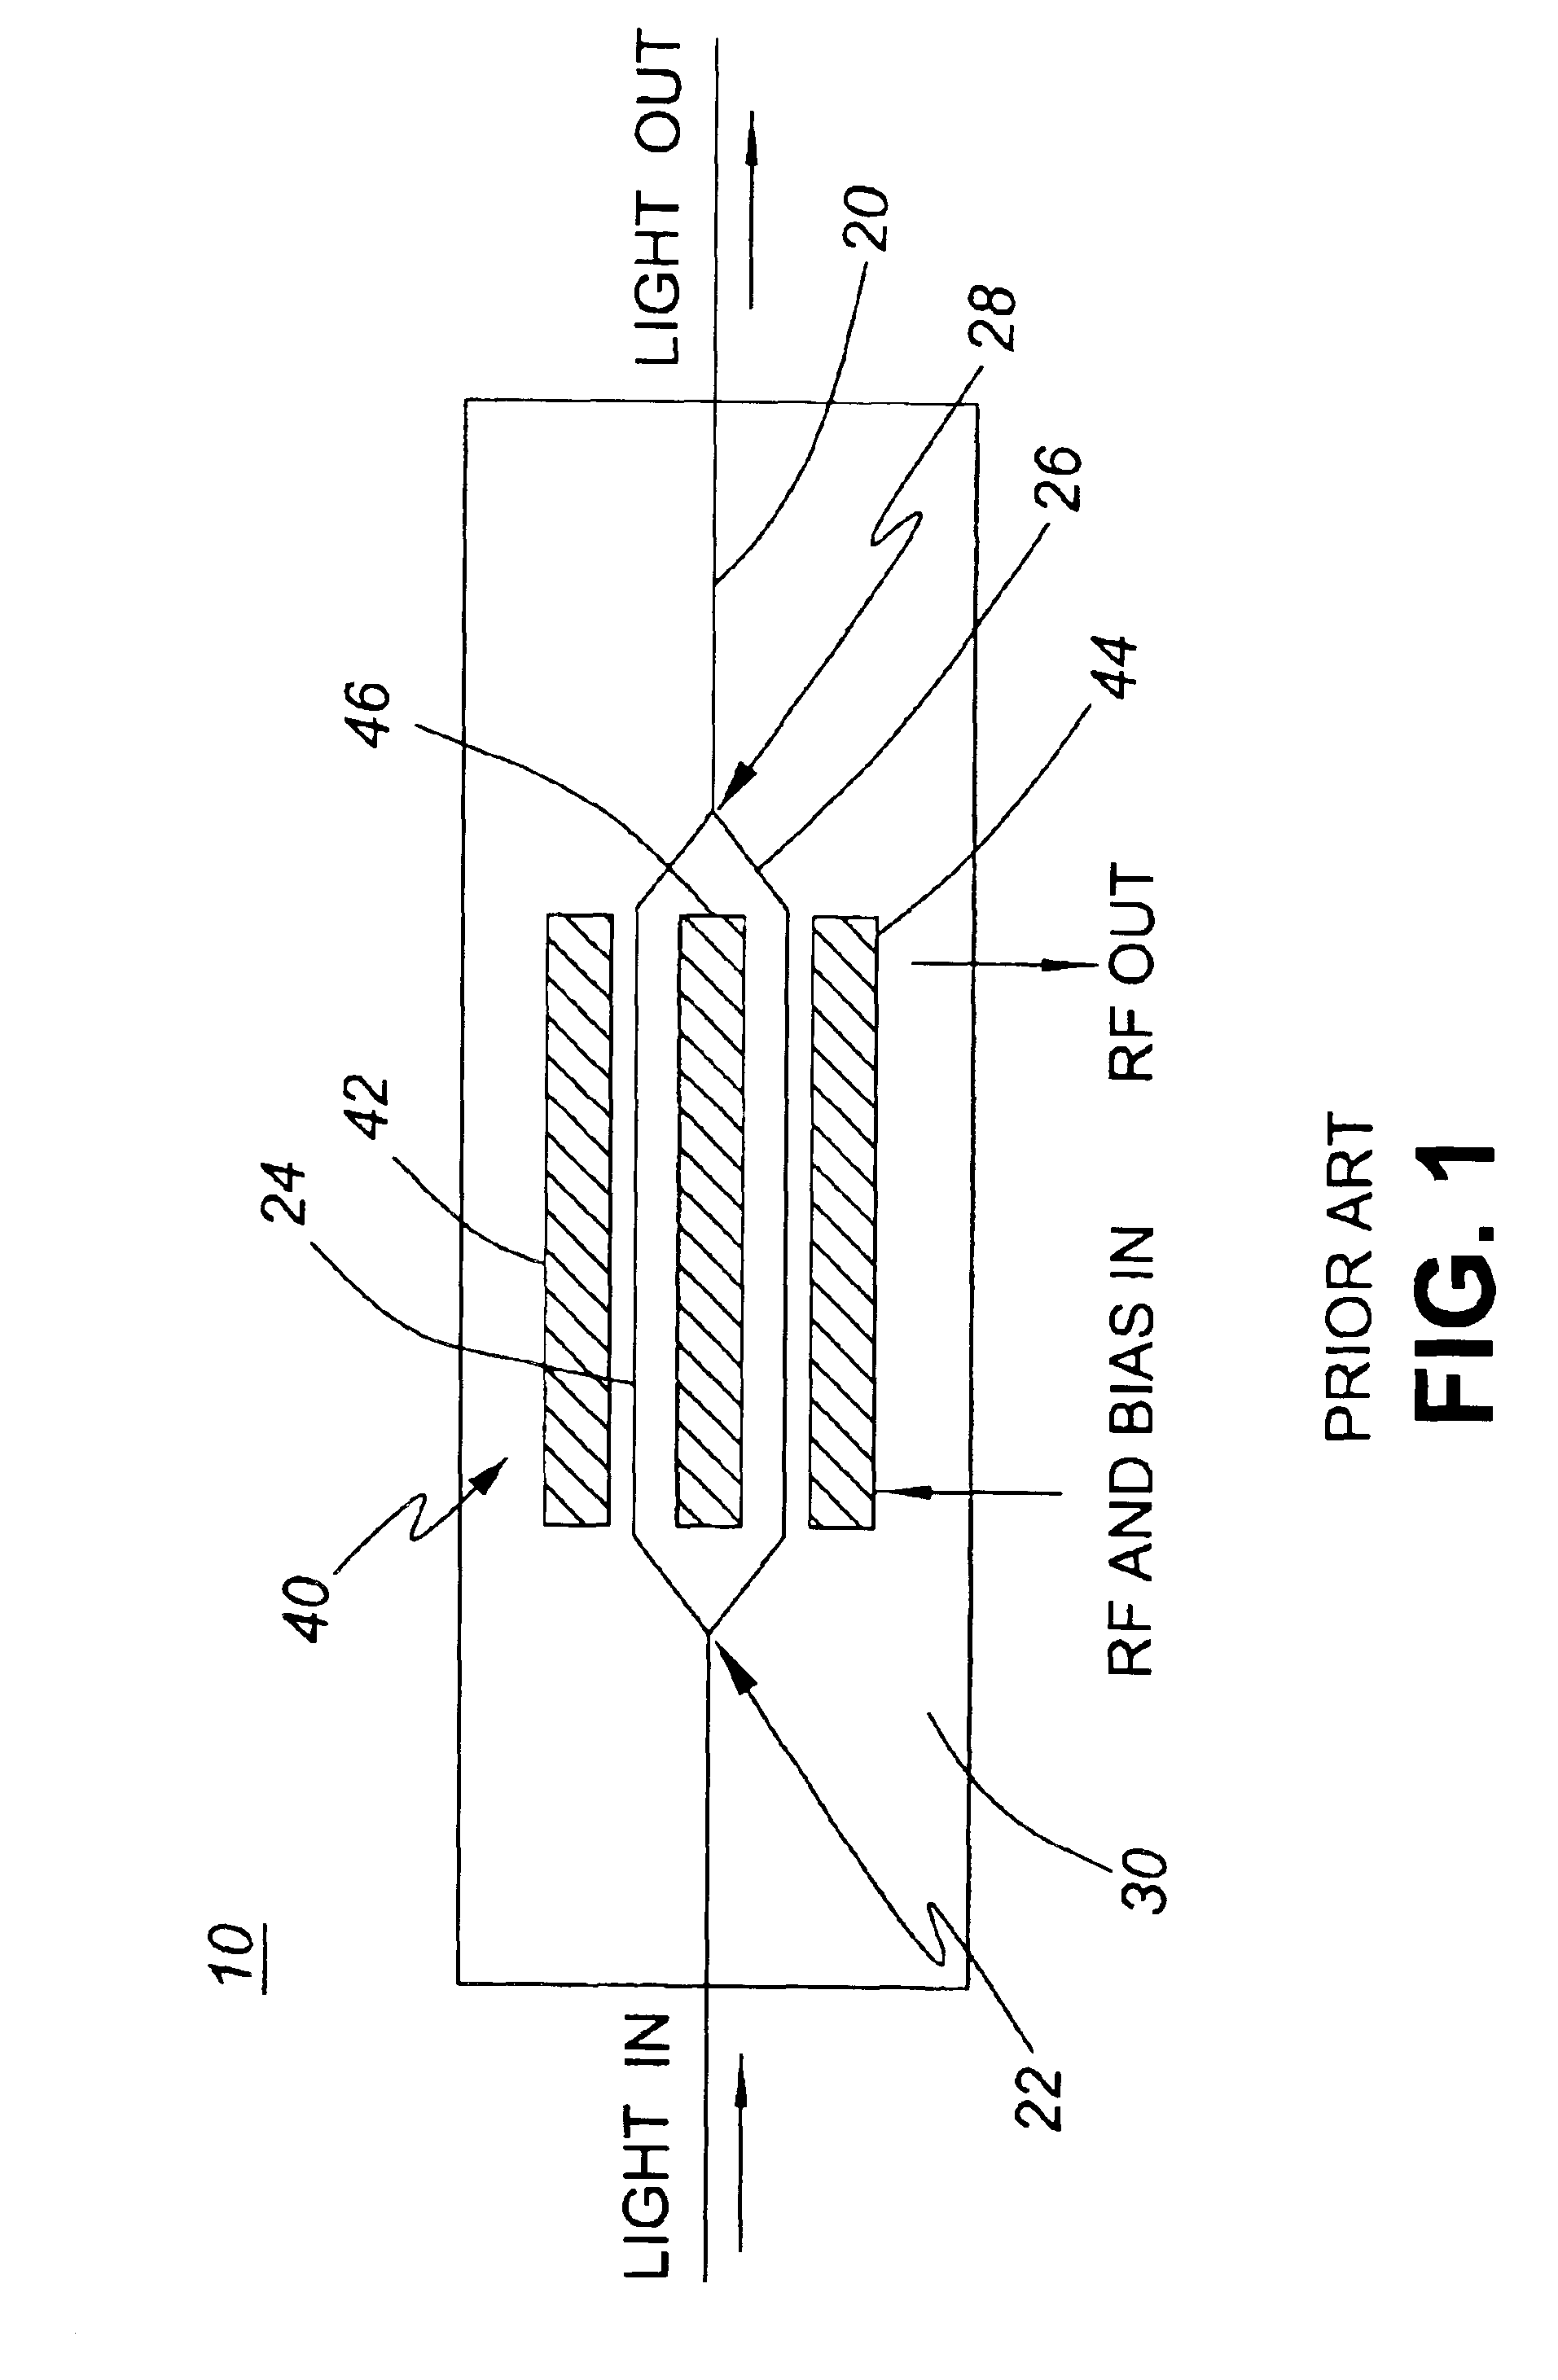 Optical digital external modulator